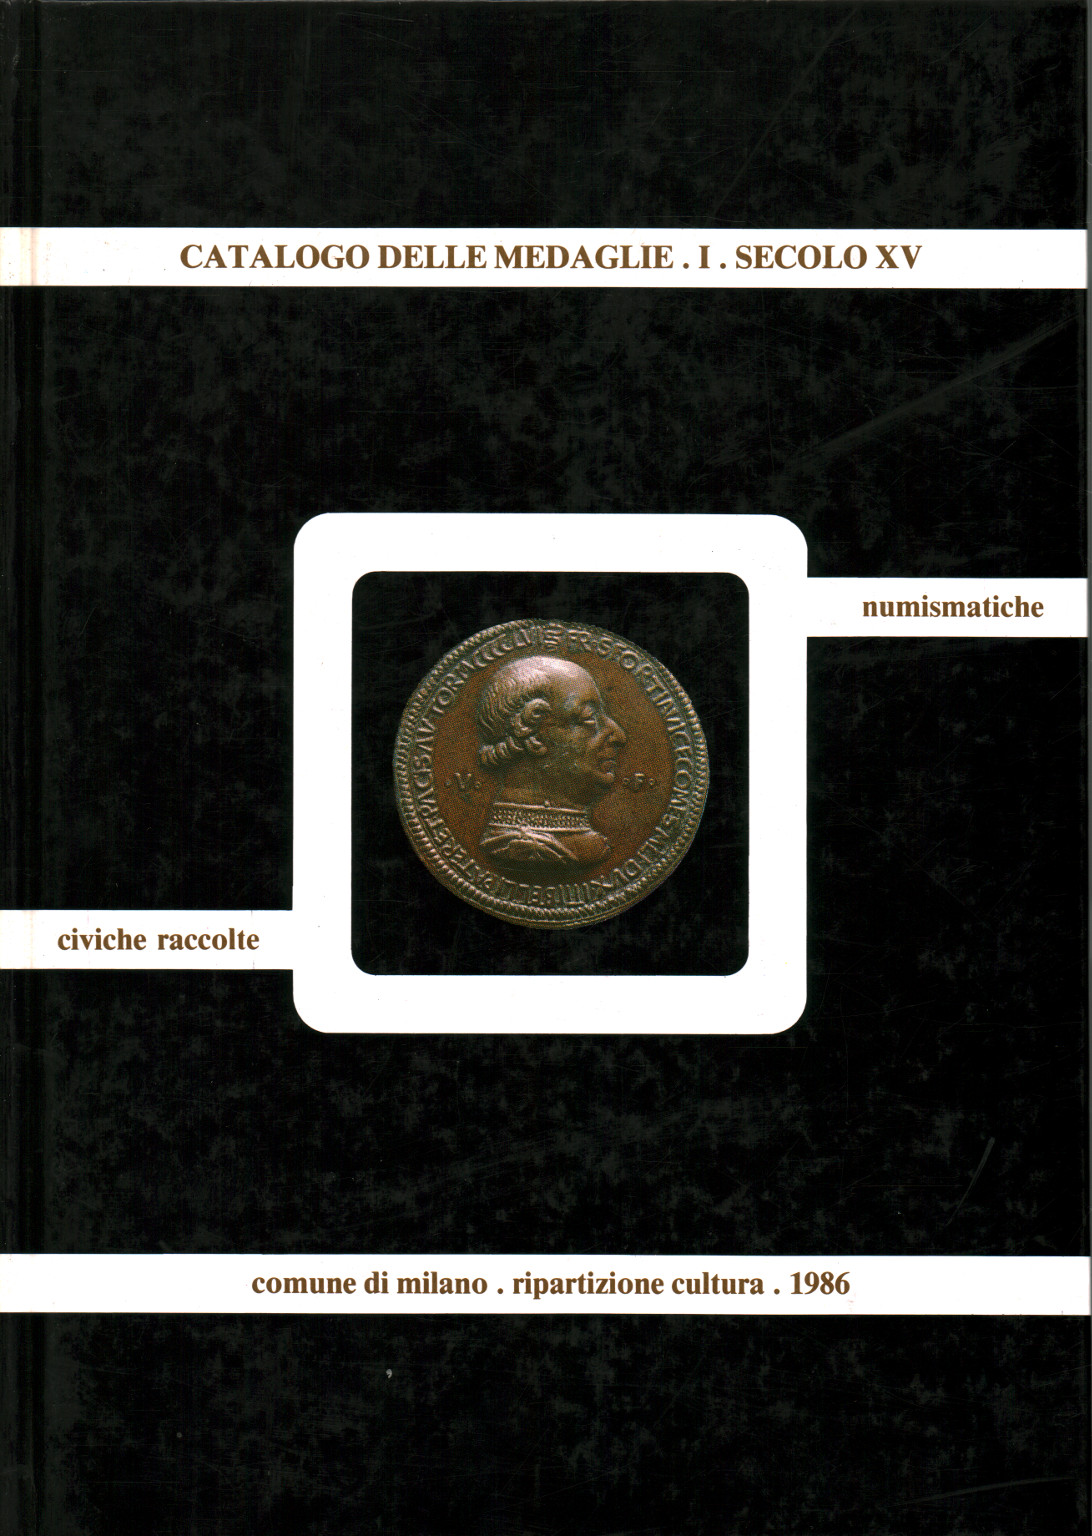 Catalog of medals I. XV century